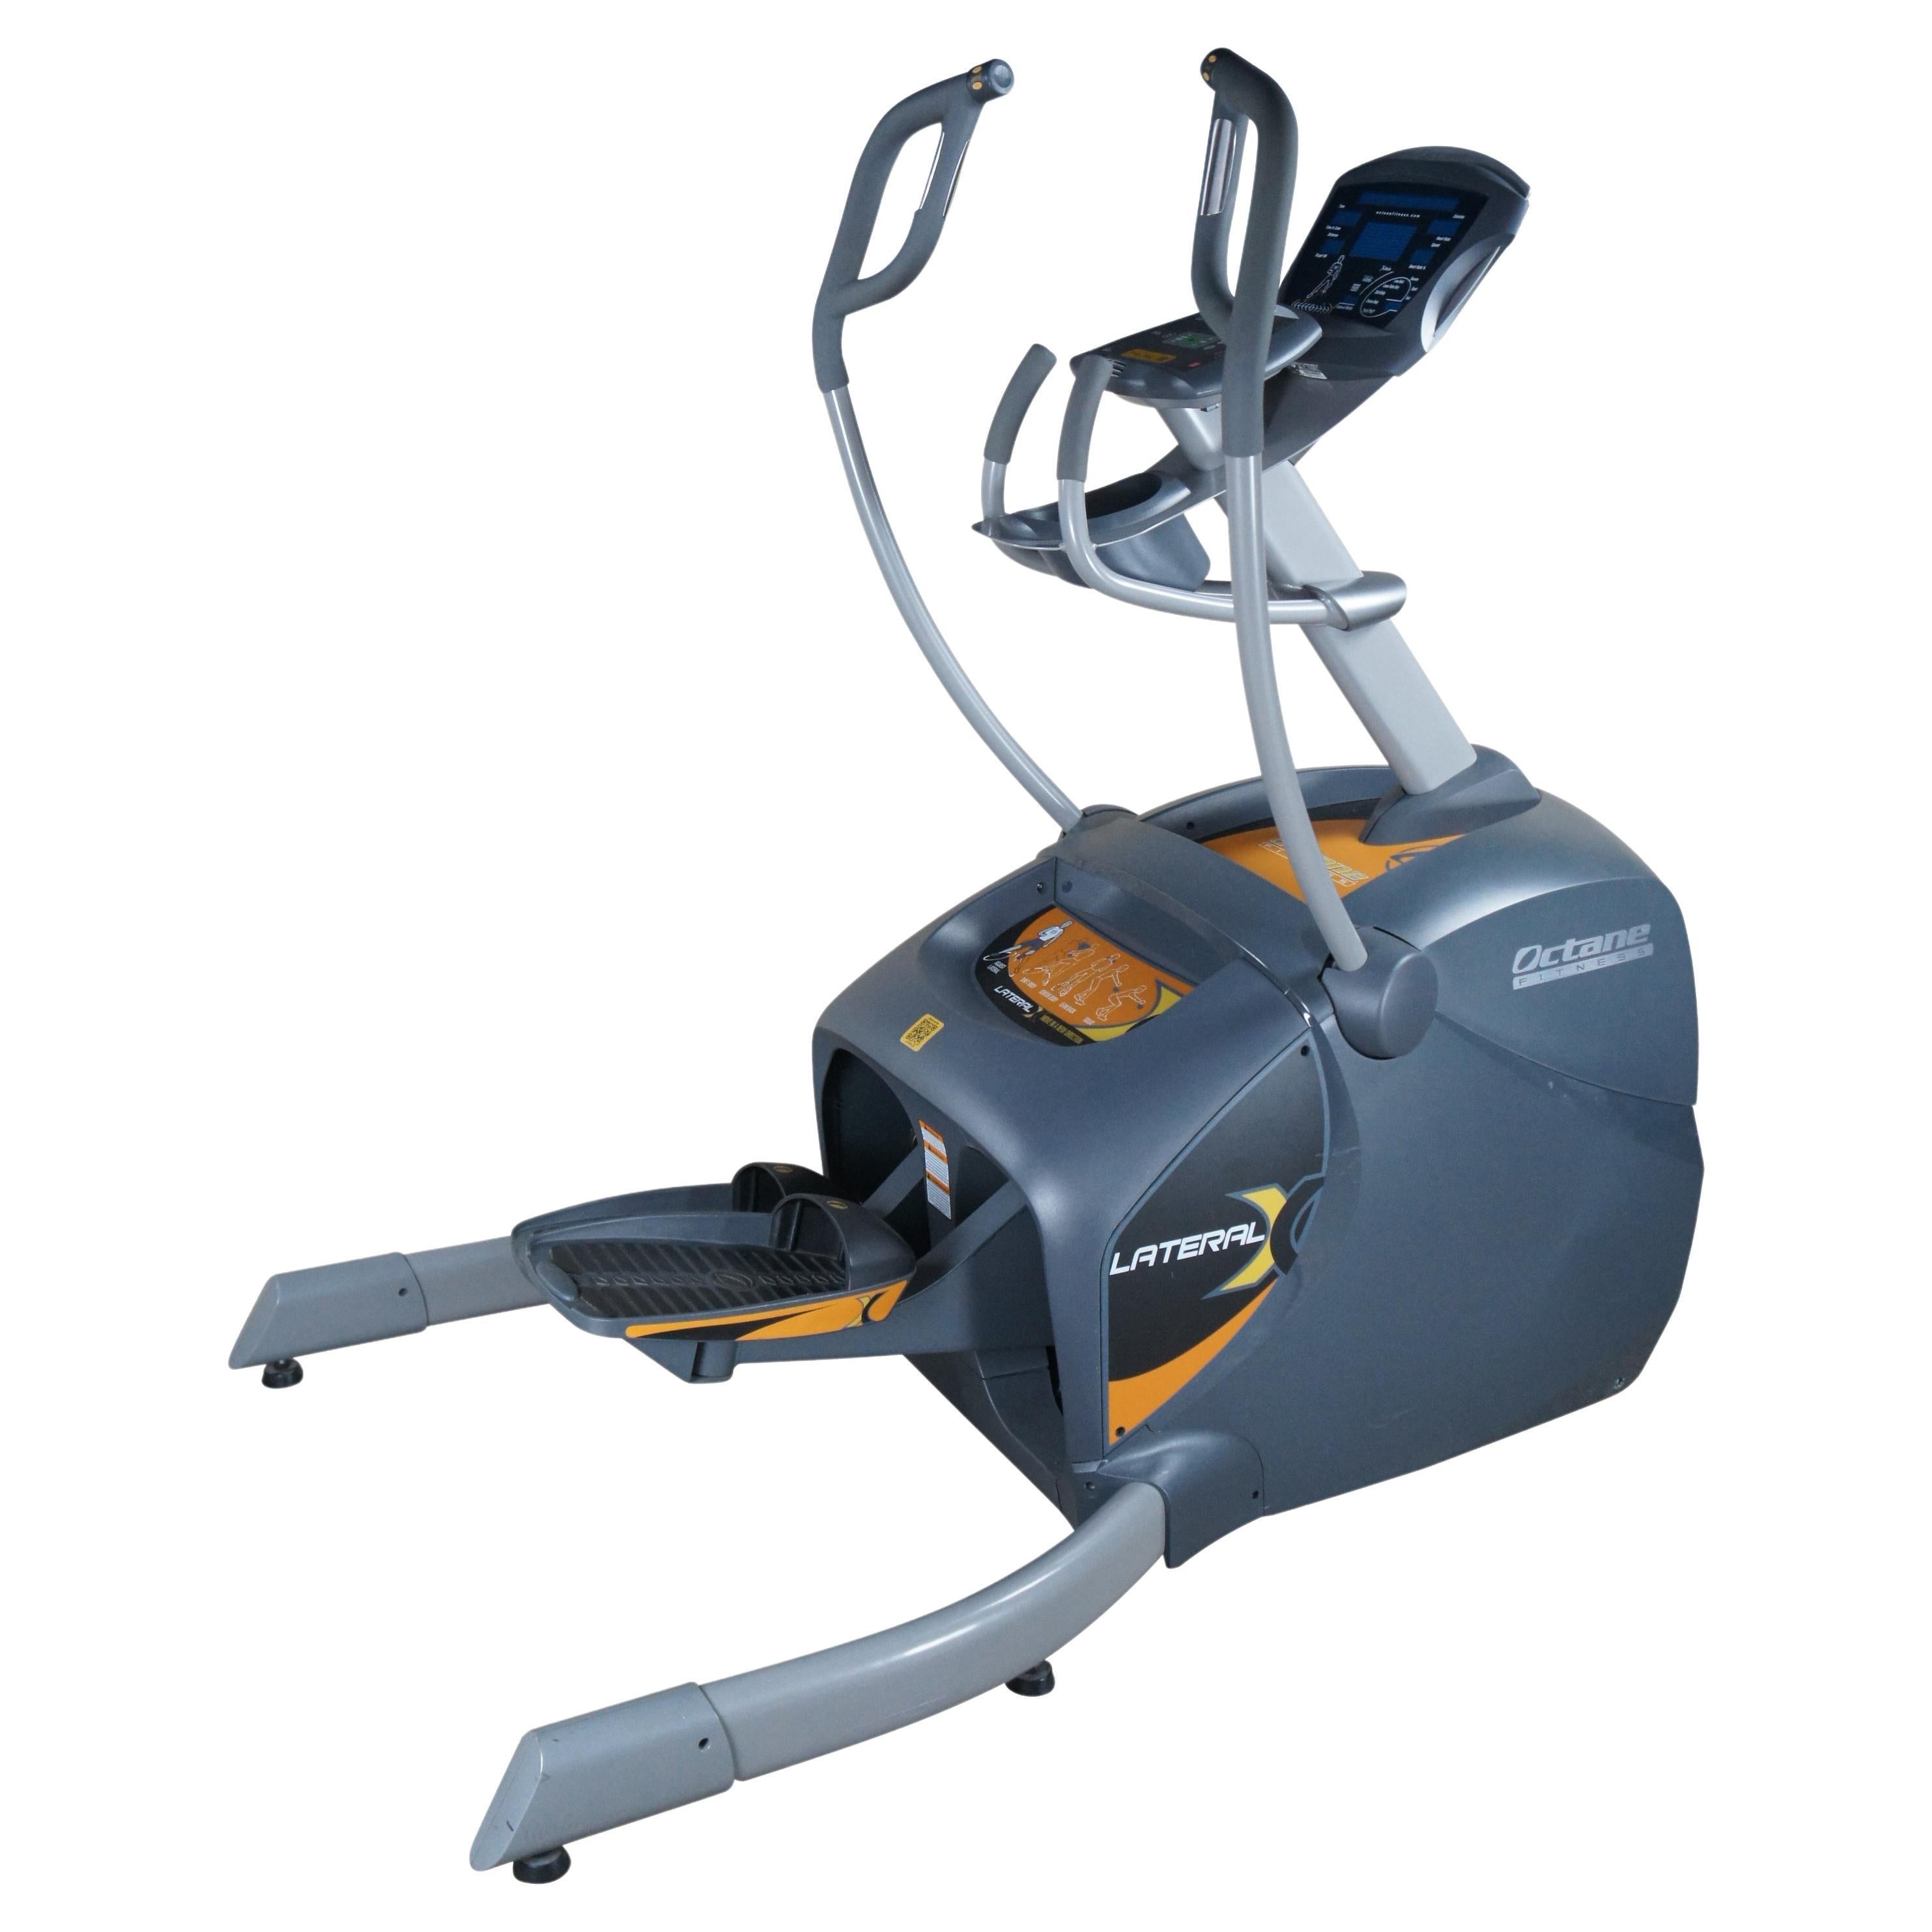 Octane Fitness Lateral Elliptical LX 8000 Crosstrainer Commercial Gym Equipment For Sale